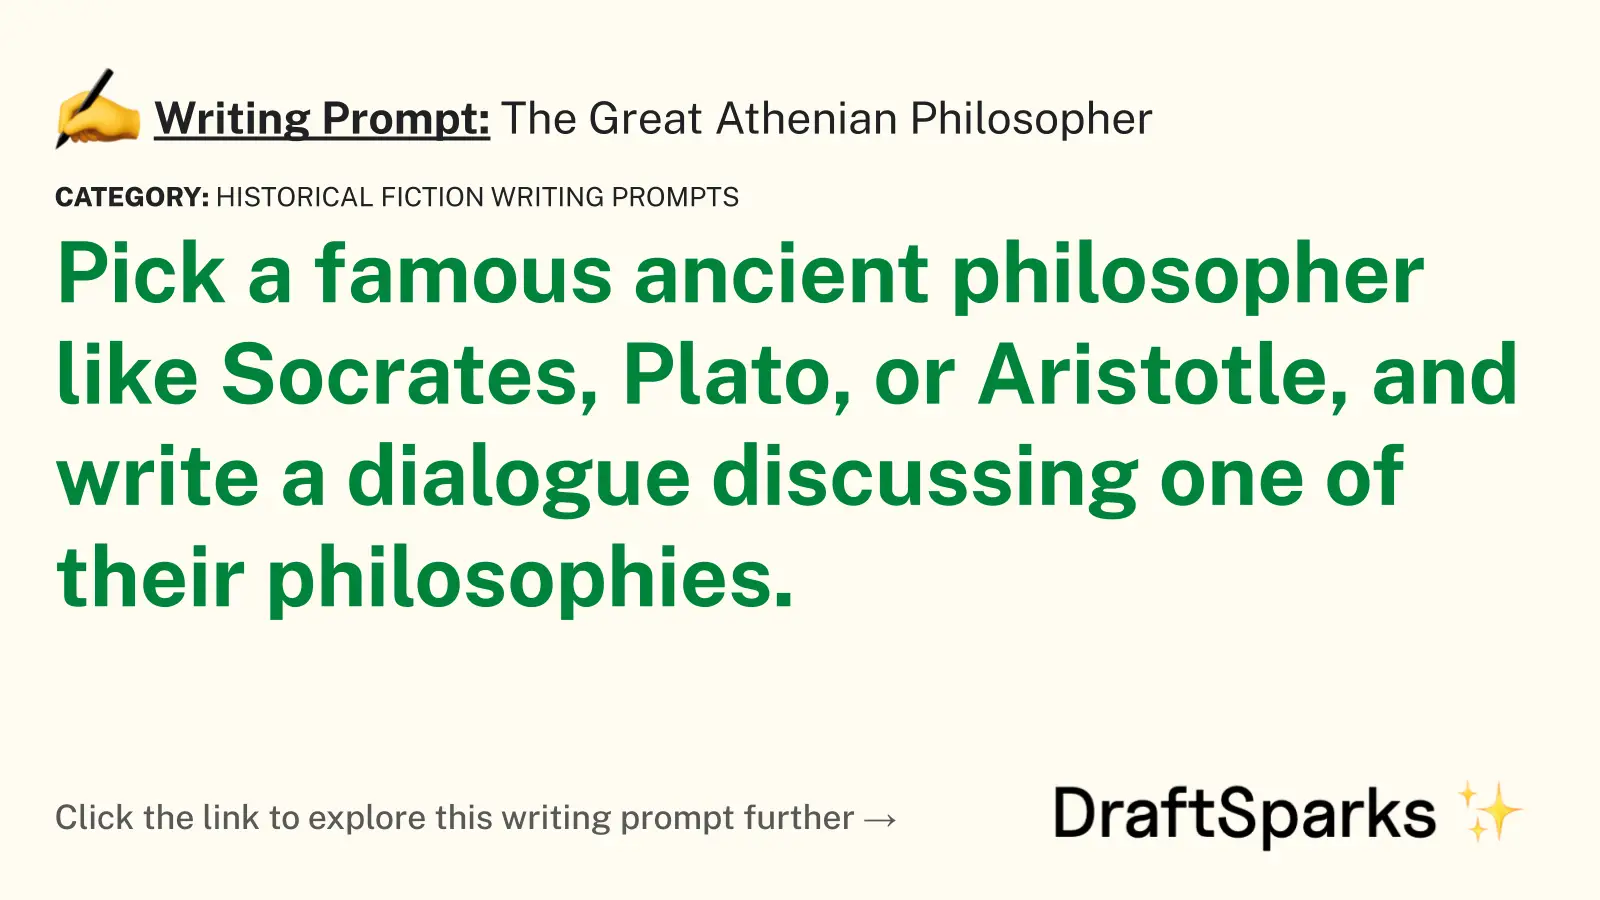 The Great Athenian Philosopher